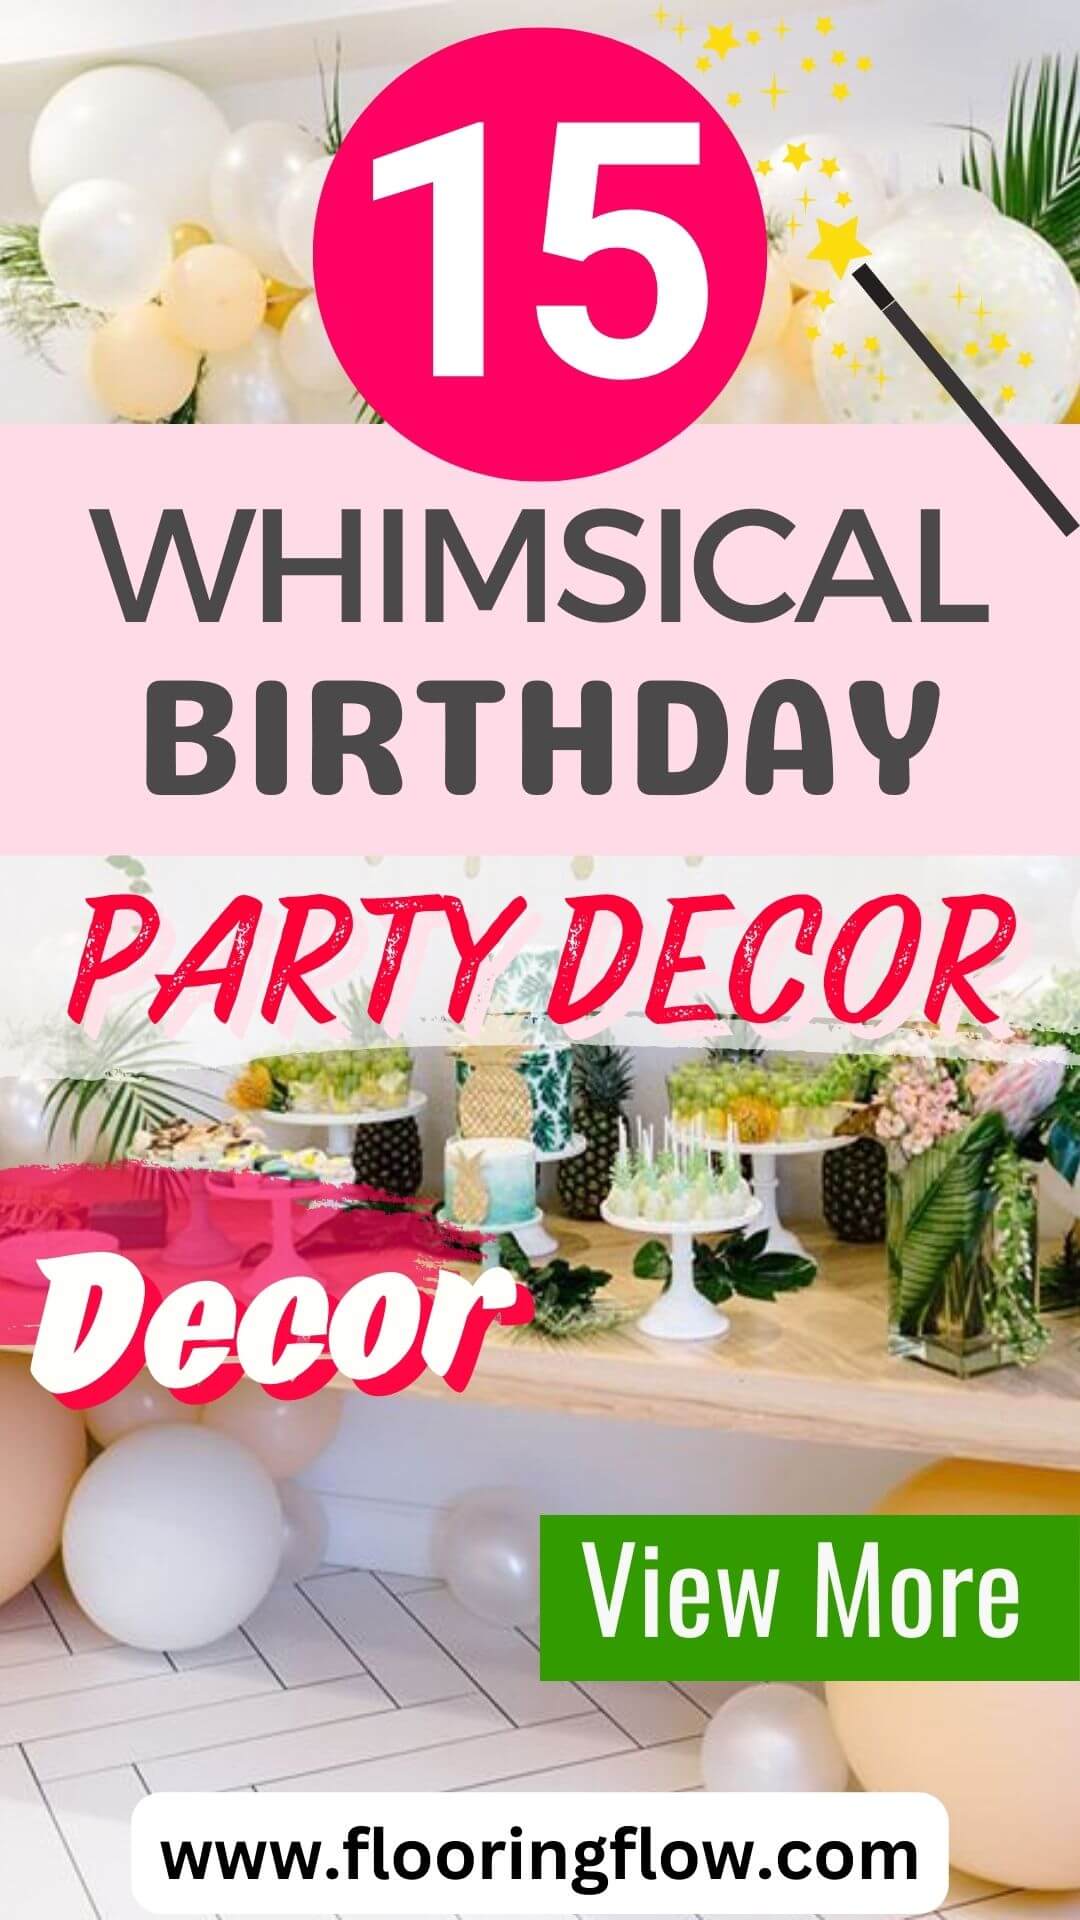 Whimsical Birthday Party Decor Ideas